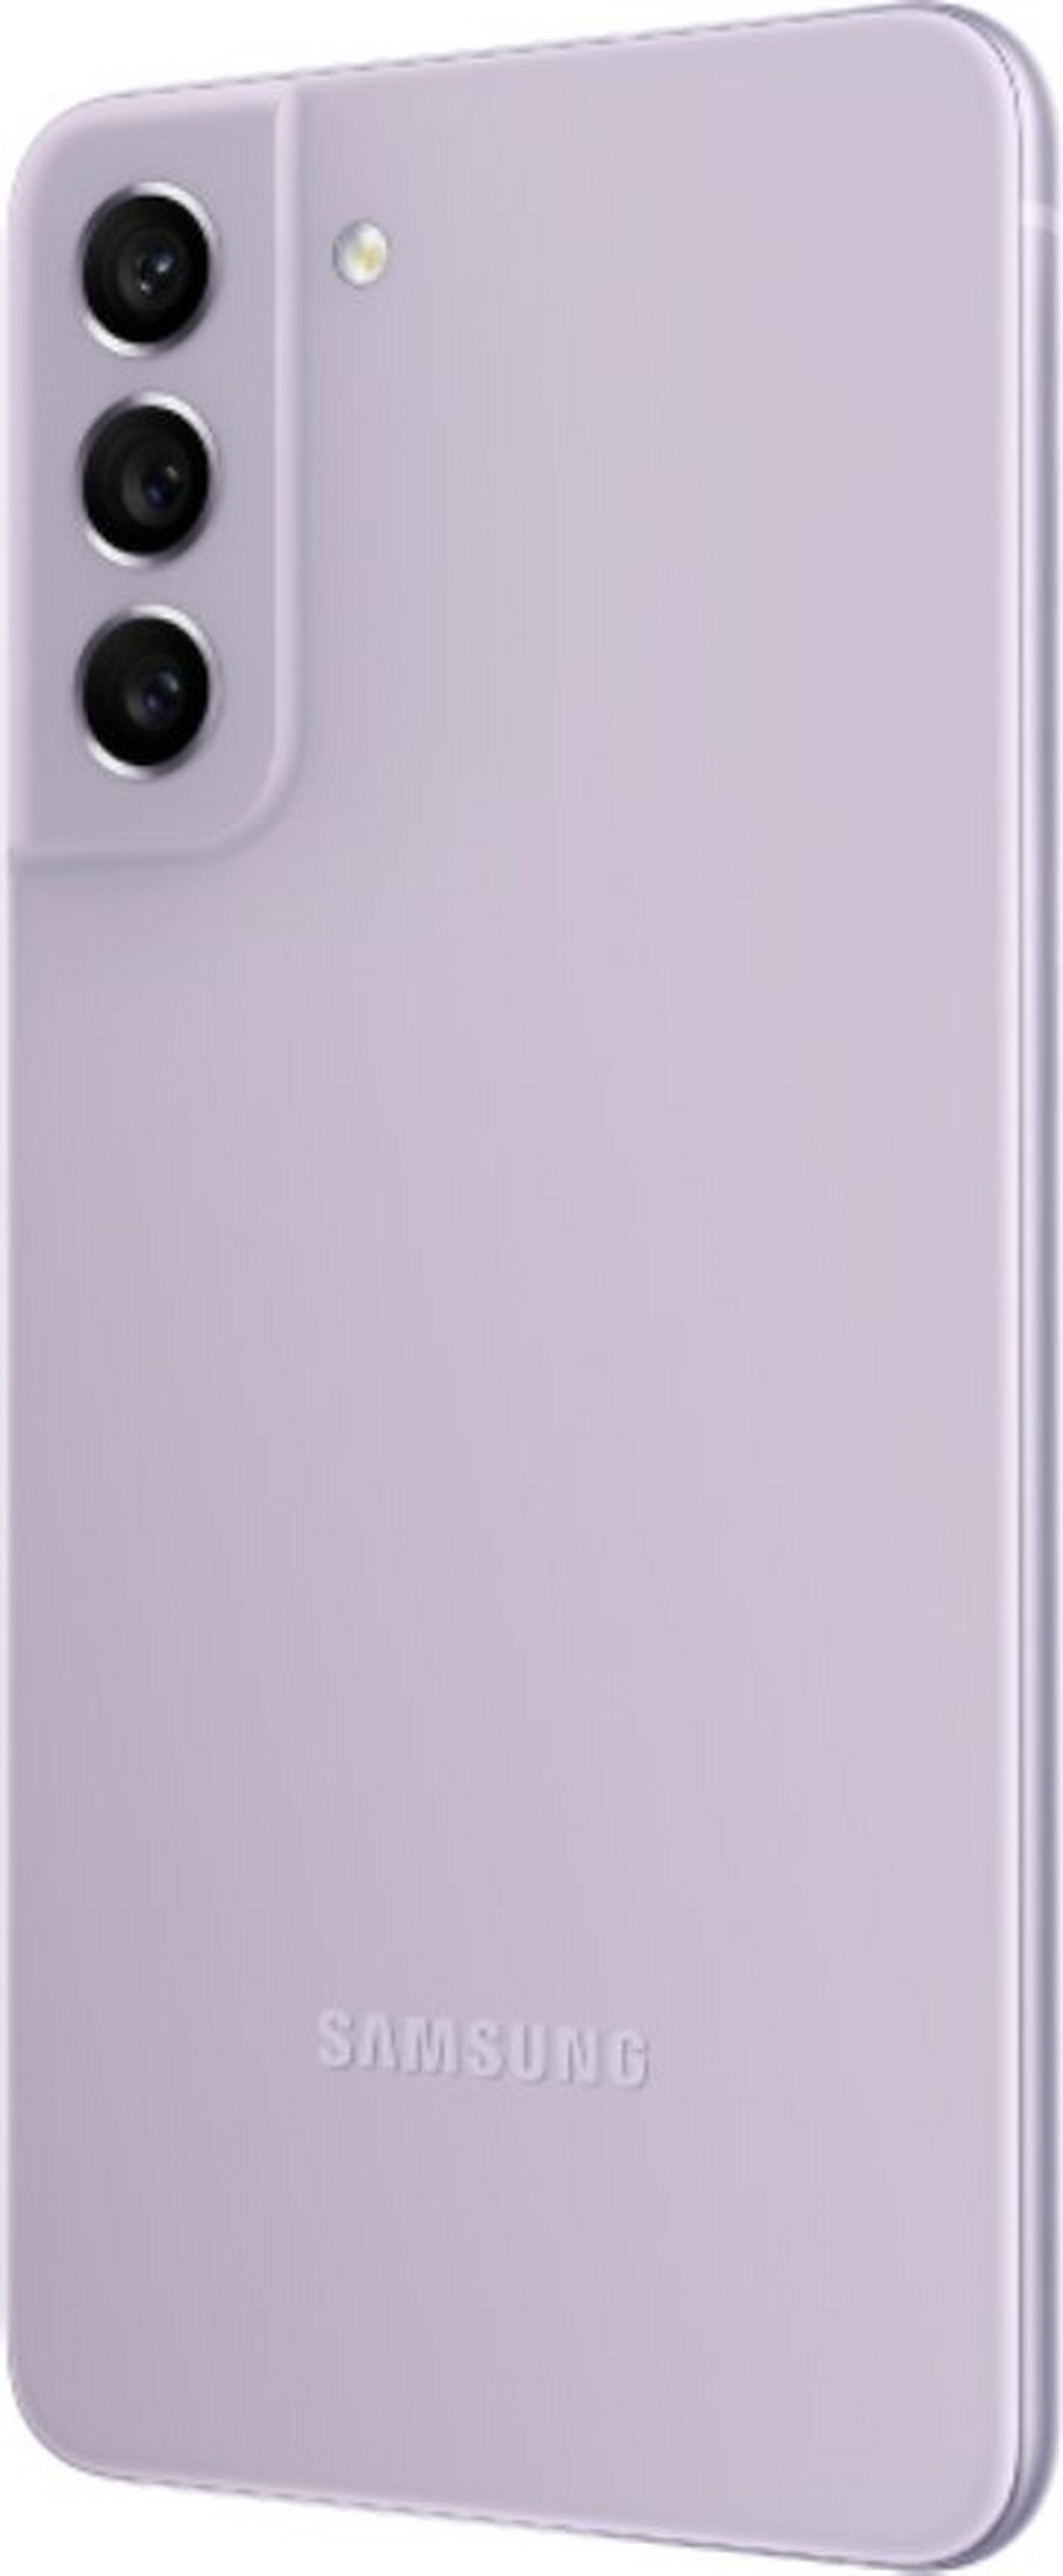 Samsung Galaxy S21 FE 5G 256GB Phone - Lavender